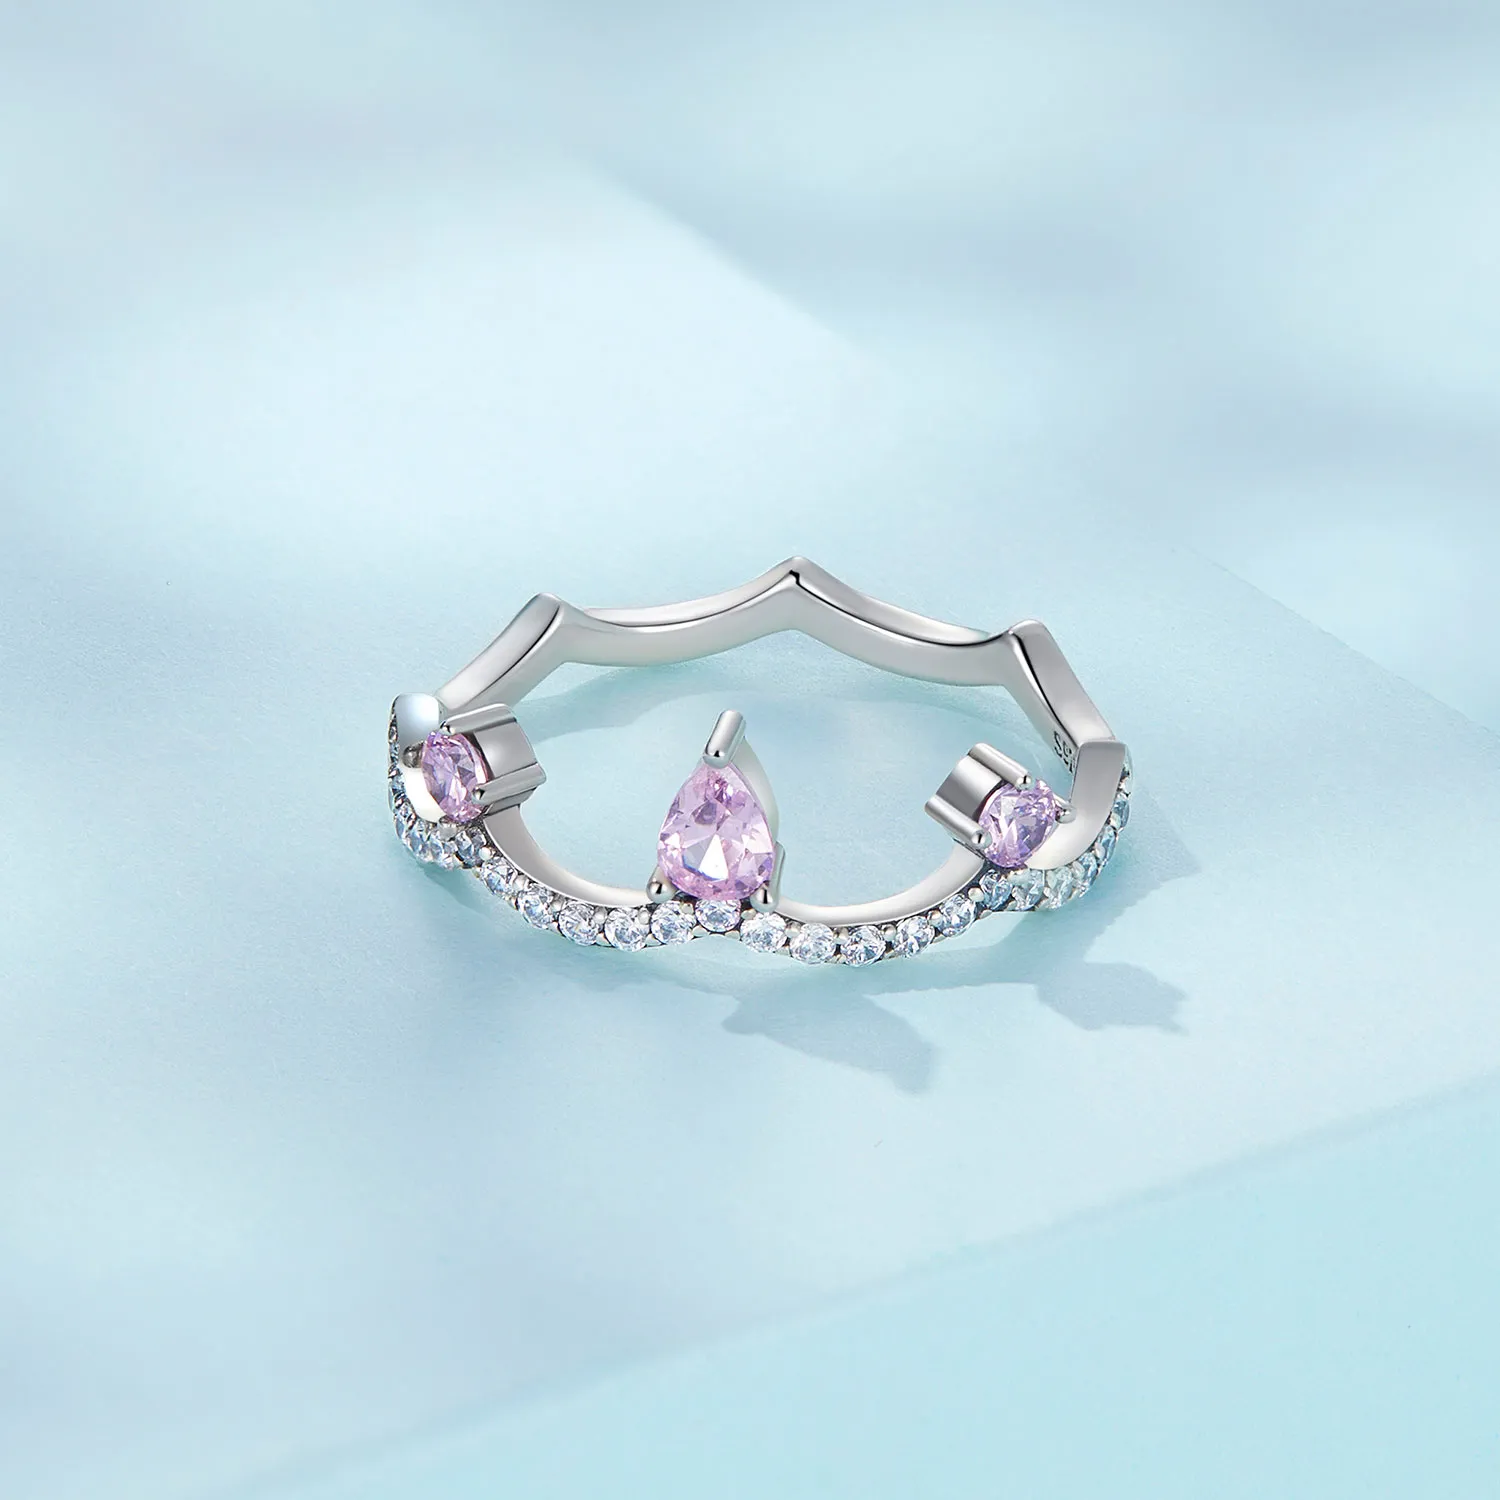 Pandora Style Crown Ring Silver - SCR888